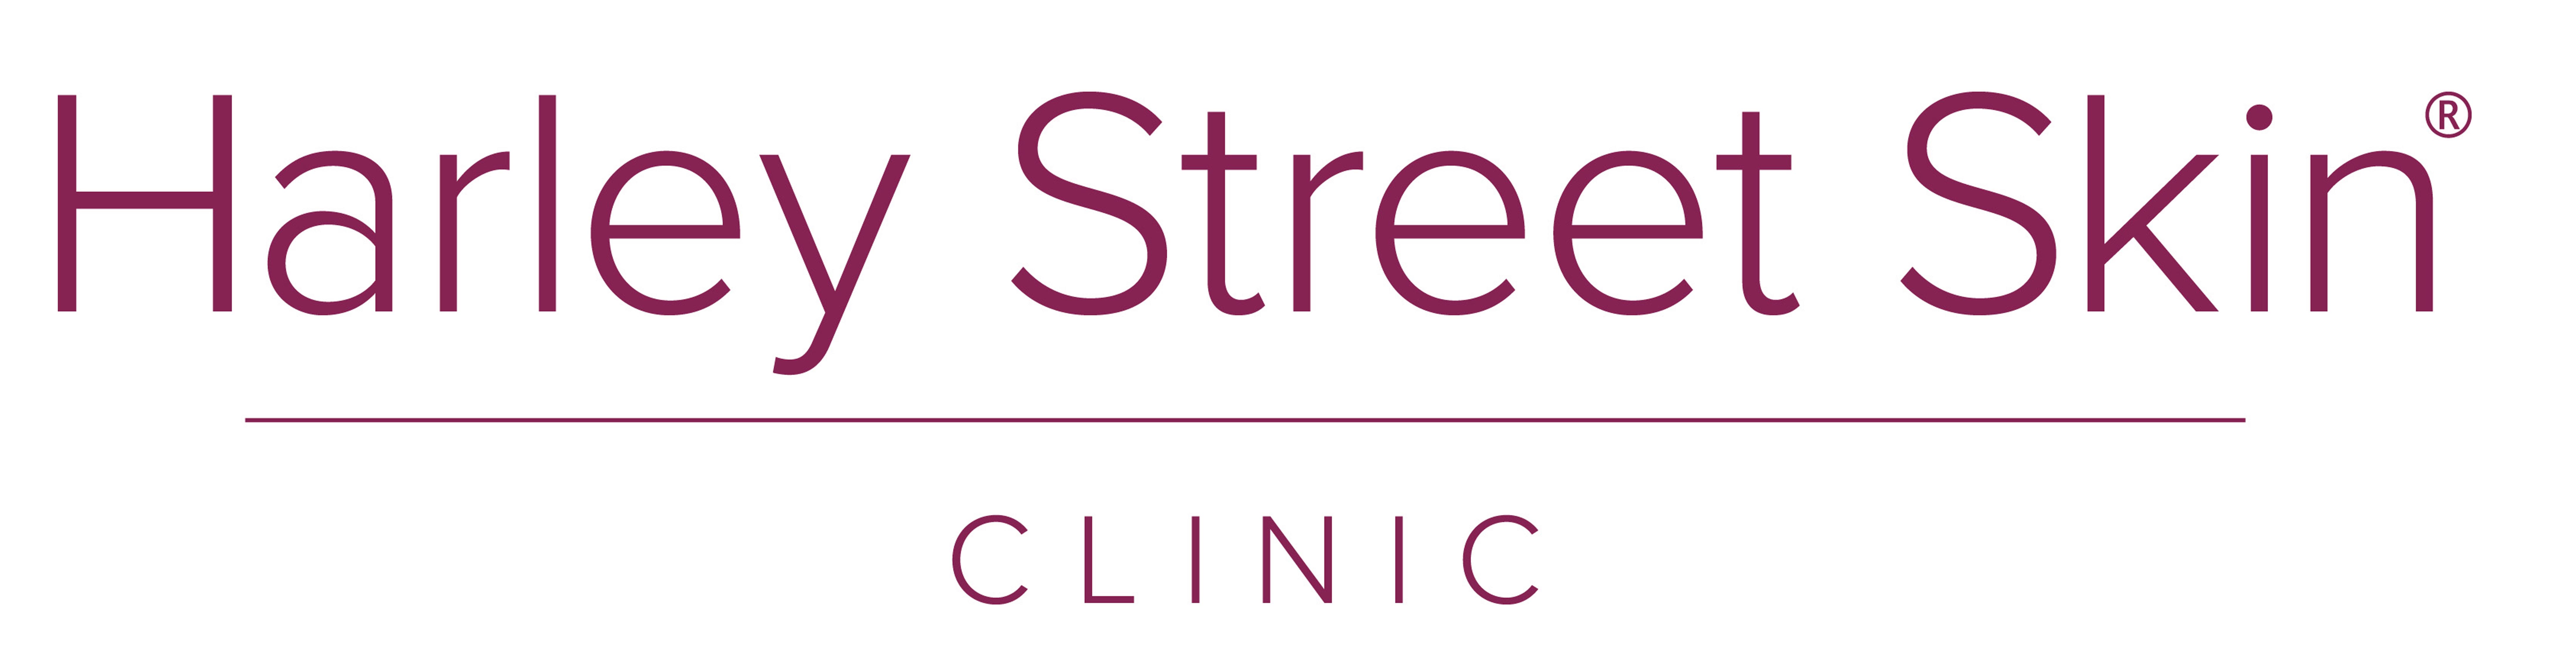 The Harley Street Skin Clinic